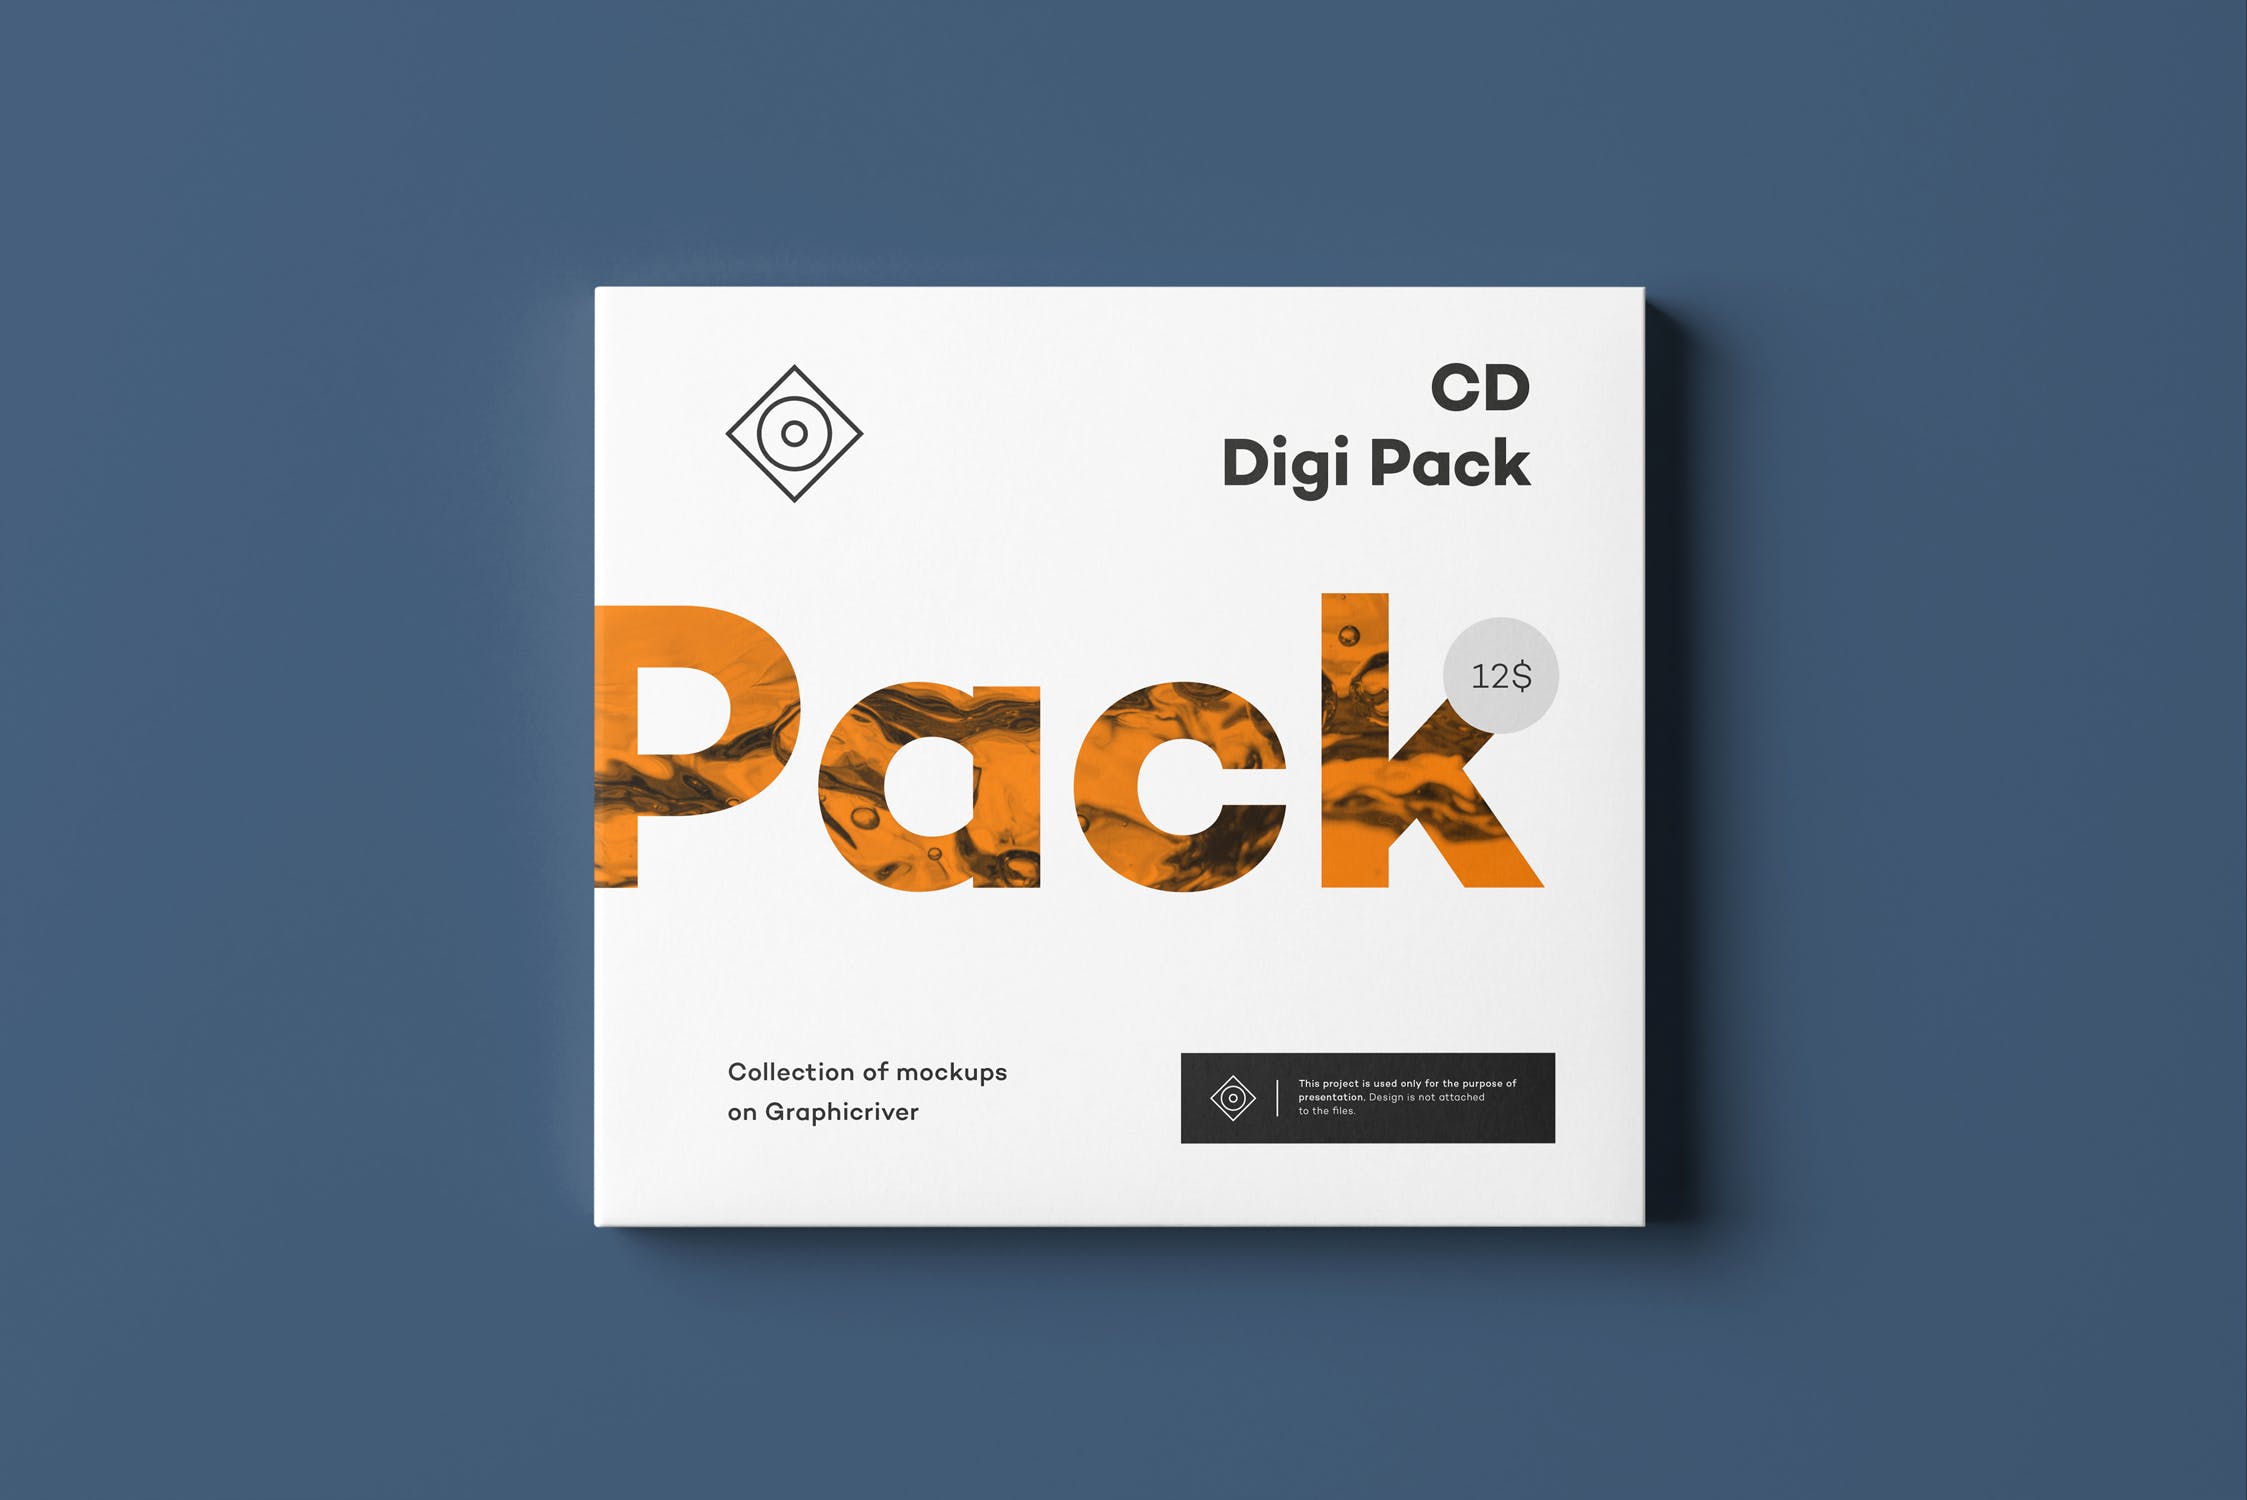 CD光碟封面&包装盒设计图非凡图库精选模板v8 CD Digi Pack Mock-up 8插图(2)